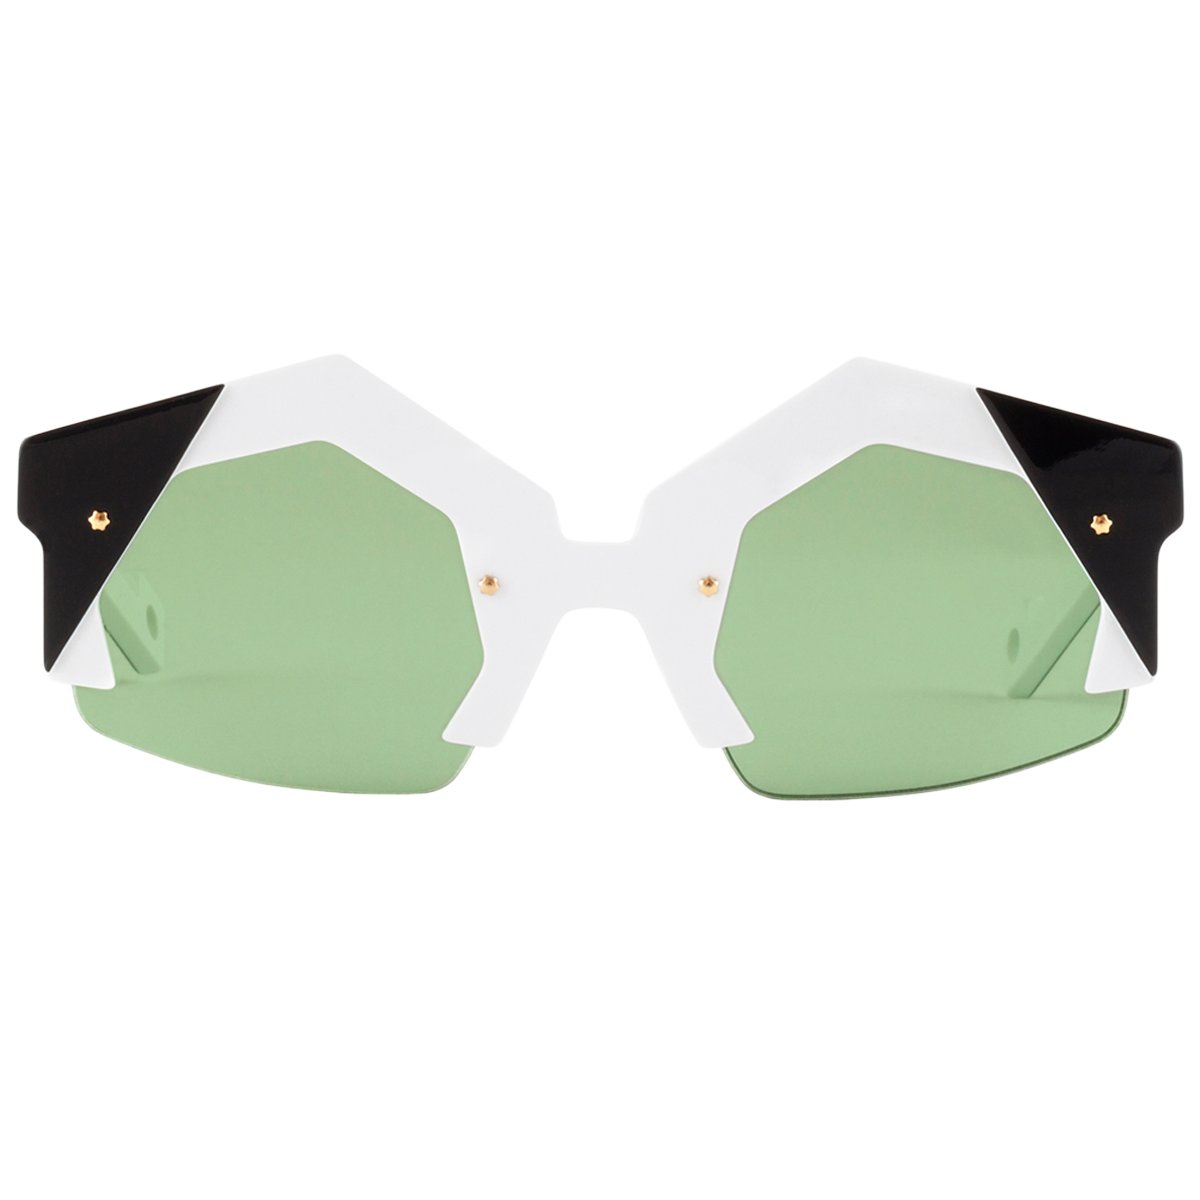 Pawaka DUA 2 Sunglasses White Black - new collection 2018